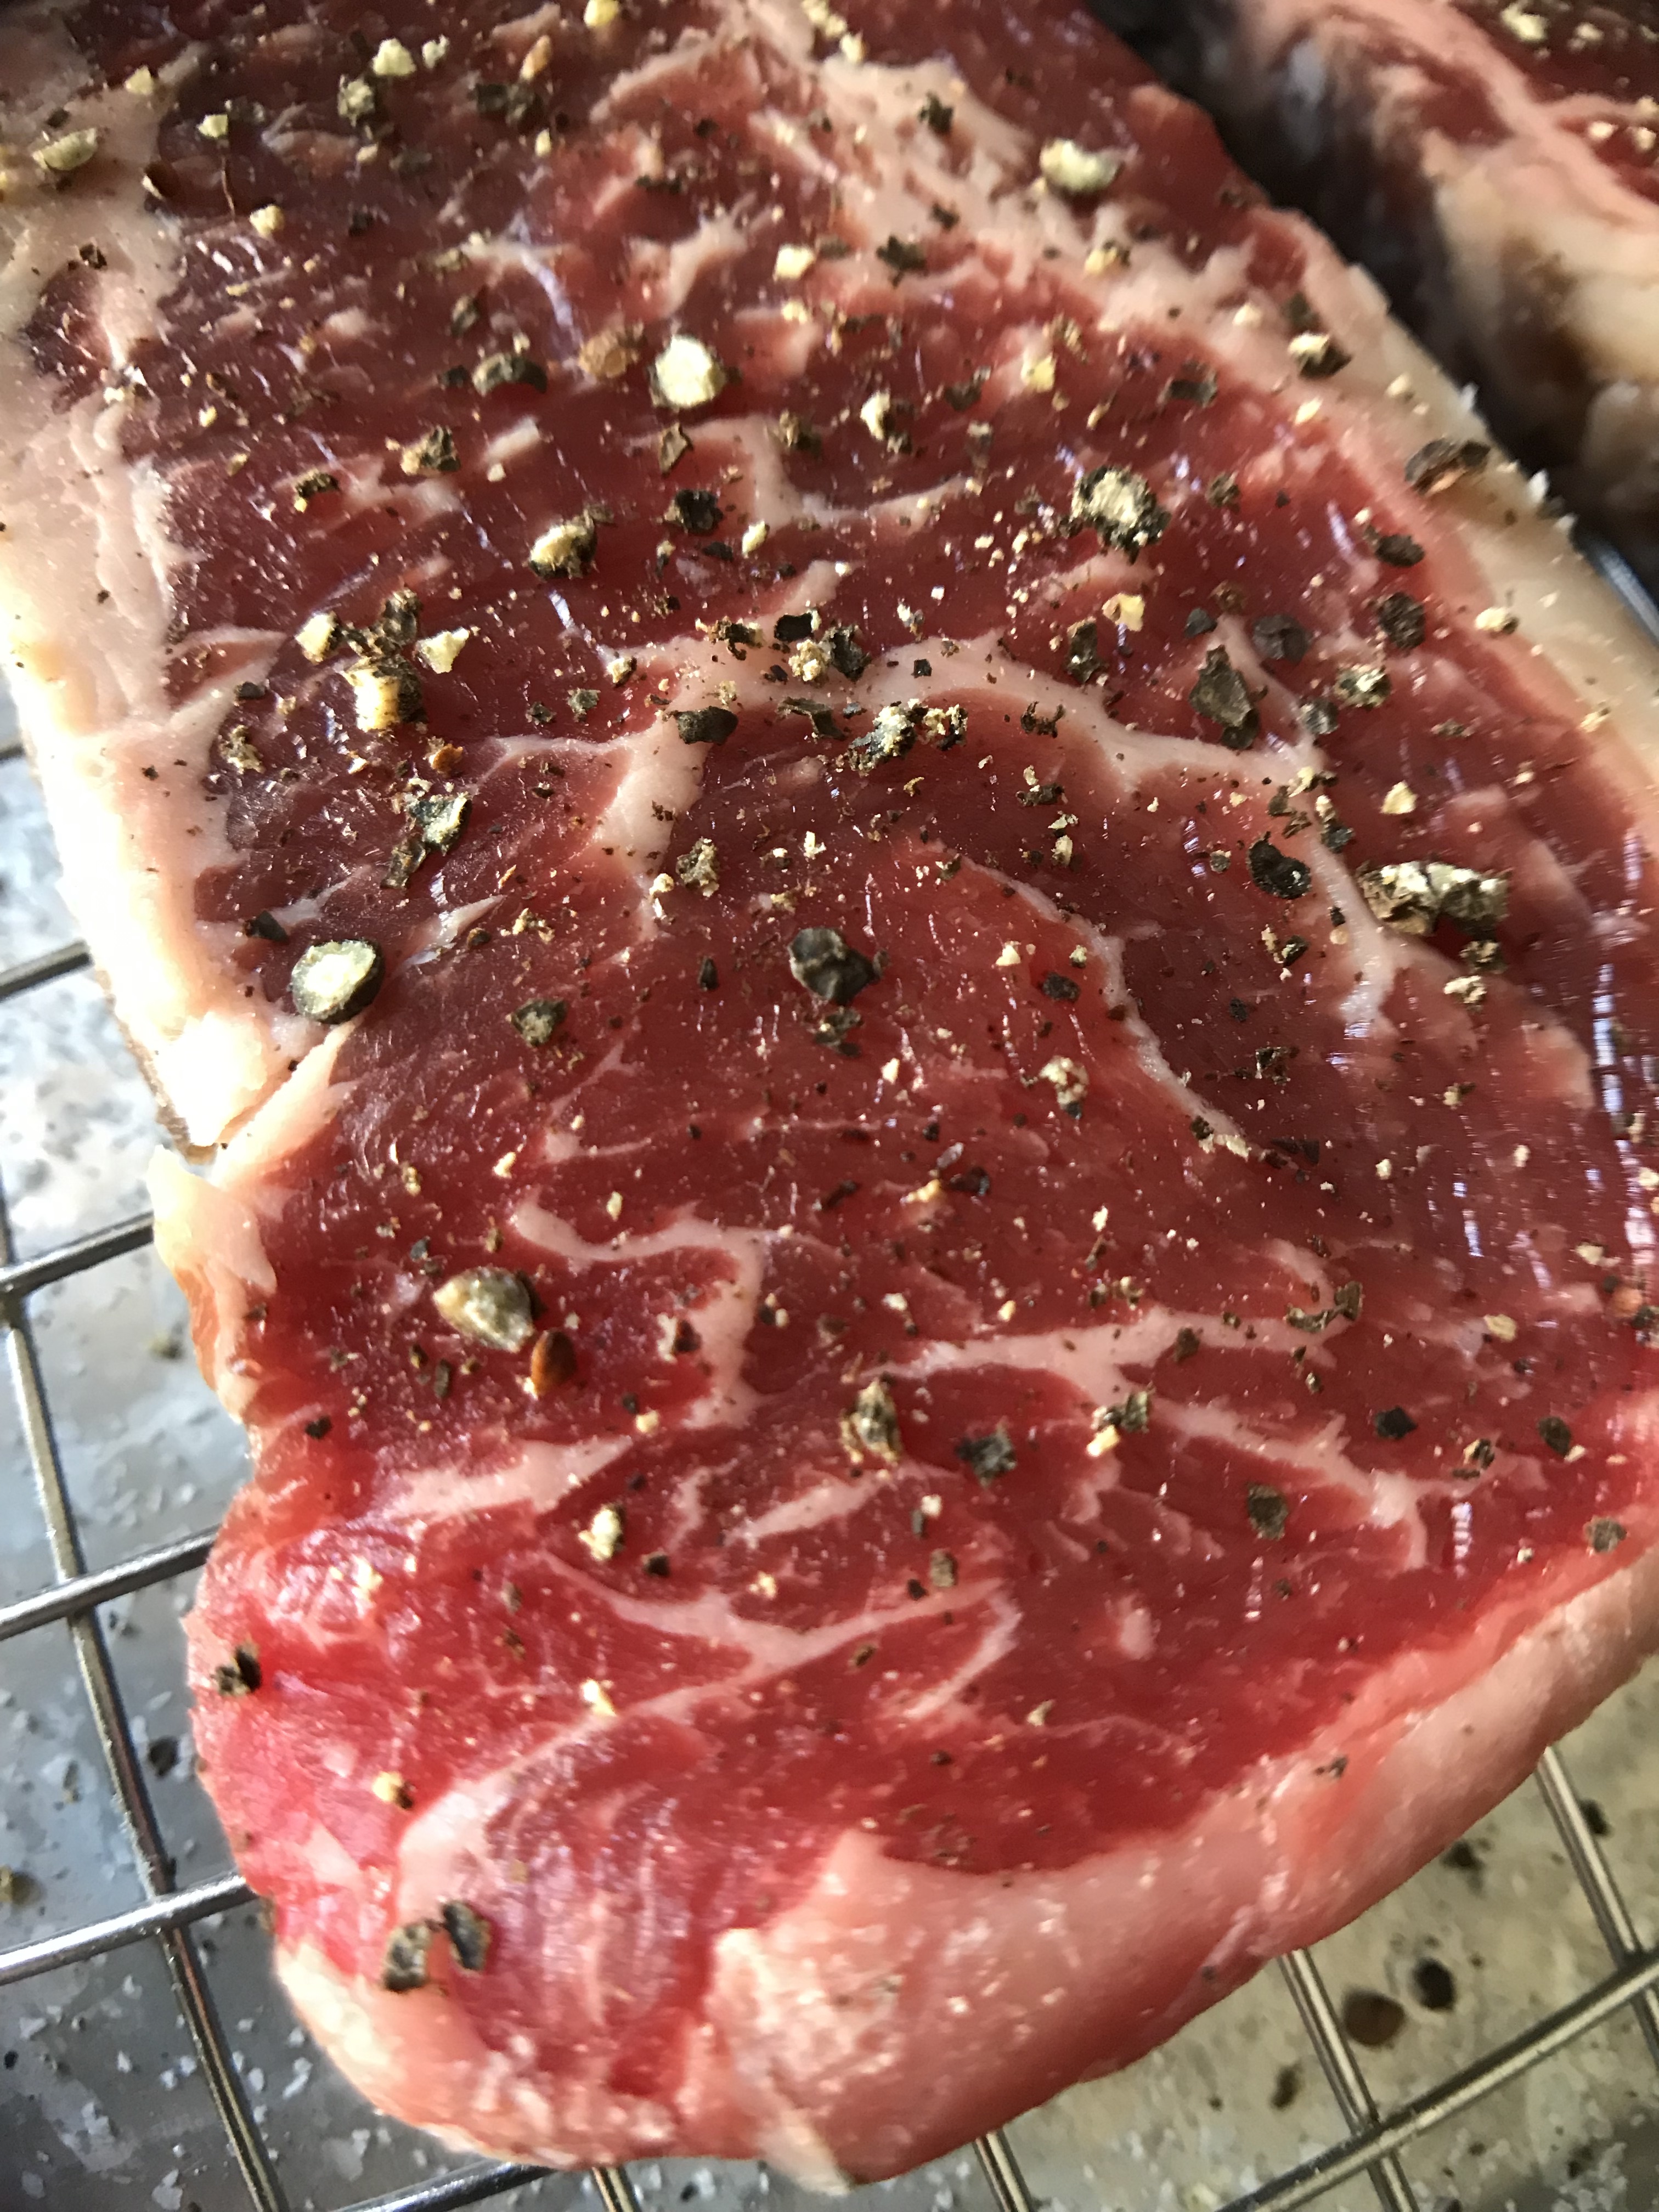 raw steak covered in pepper